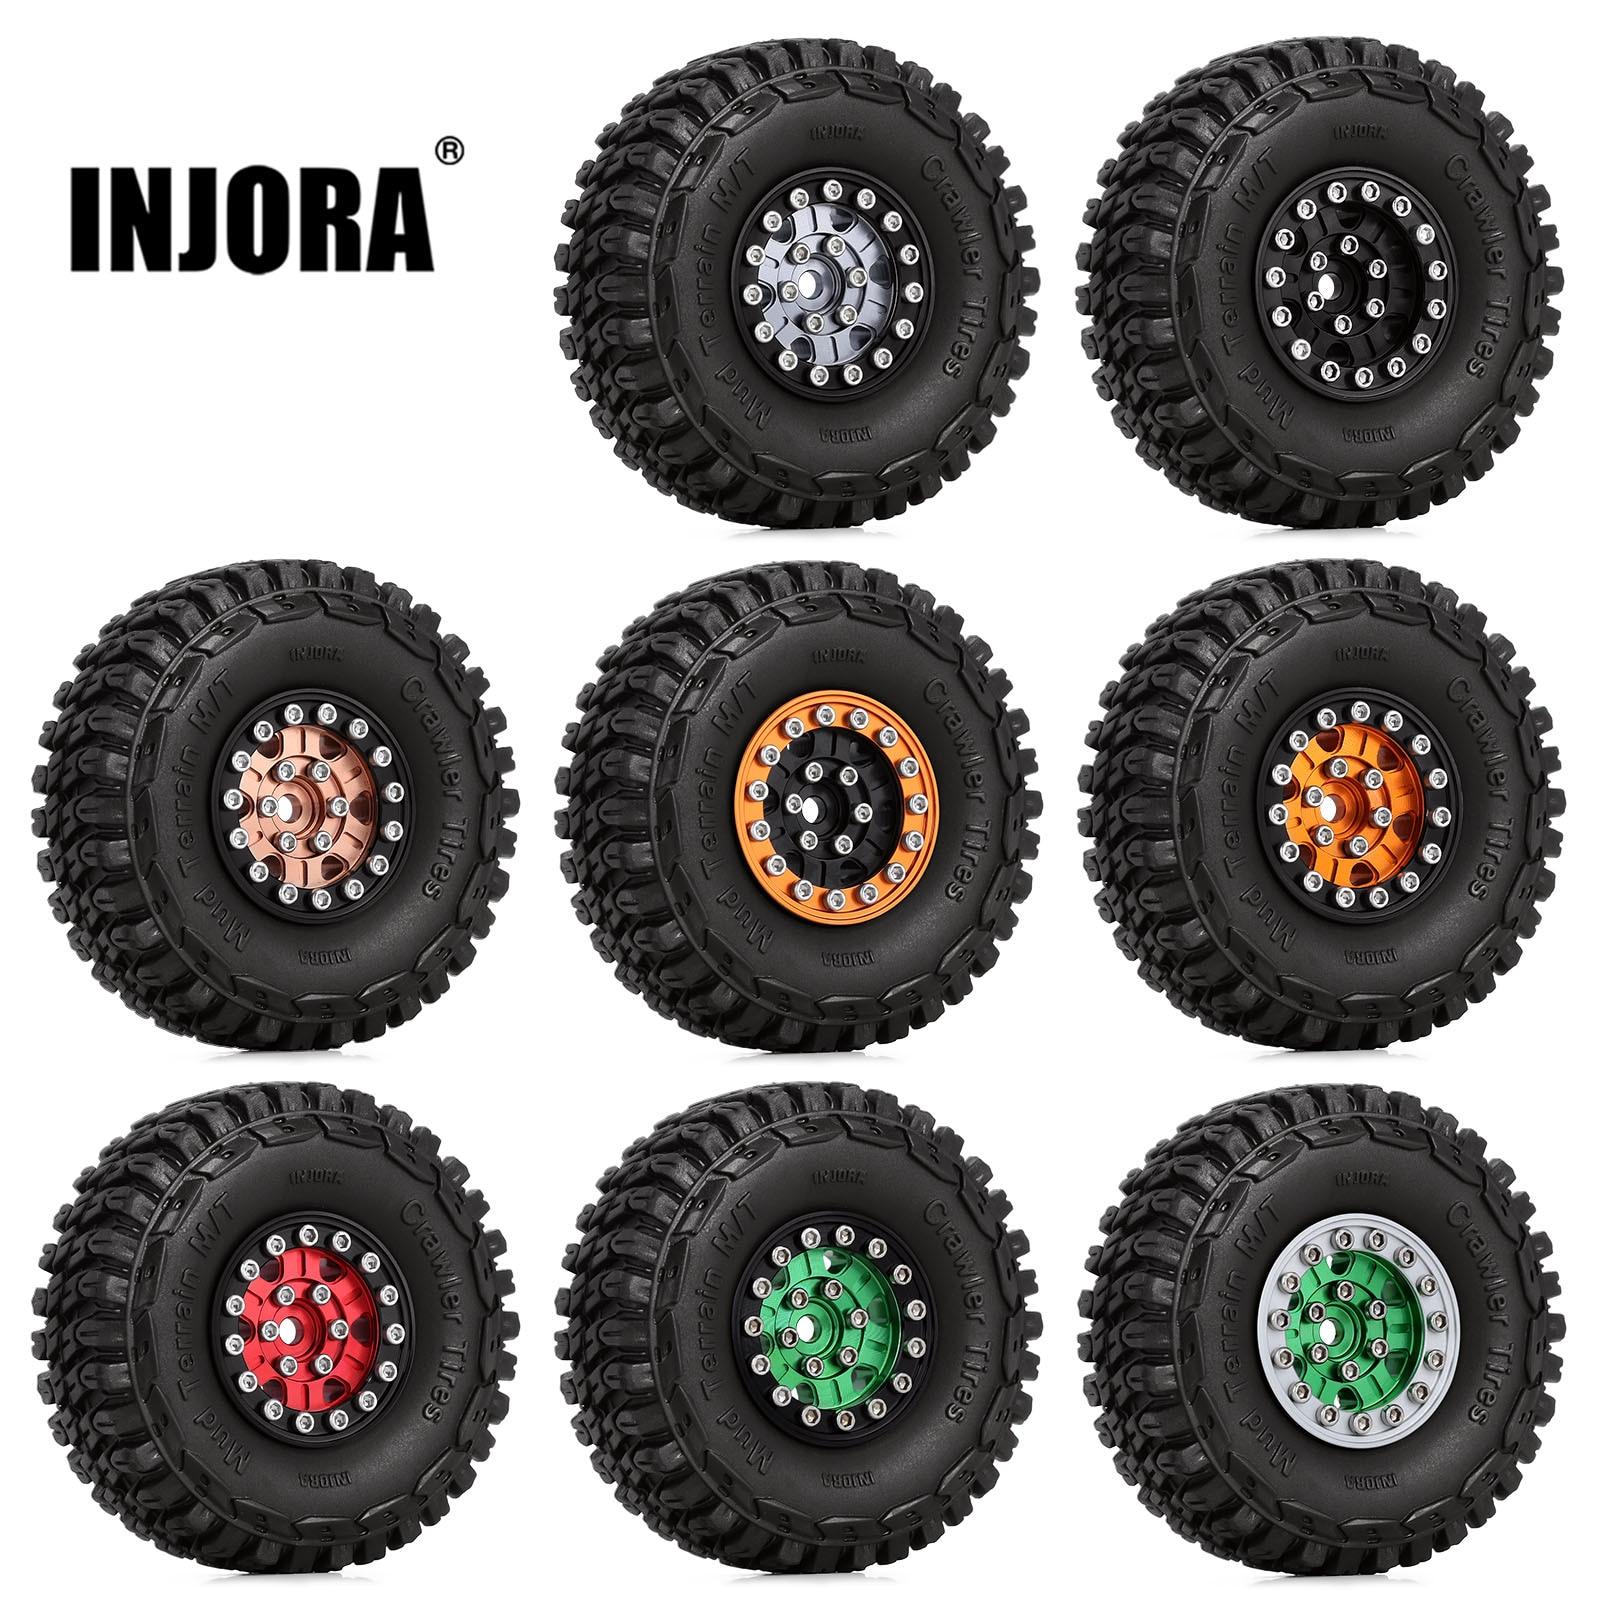 INJORA-1-0-Aluminum-Beadlock-Wheels-Soft-Rubber-Tires-Set-for-1-24-RC-Crawler-Car.jpg